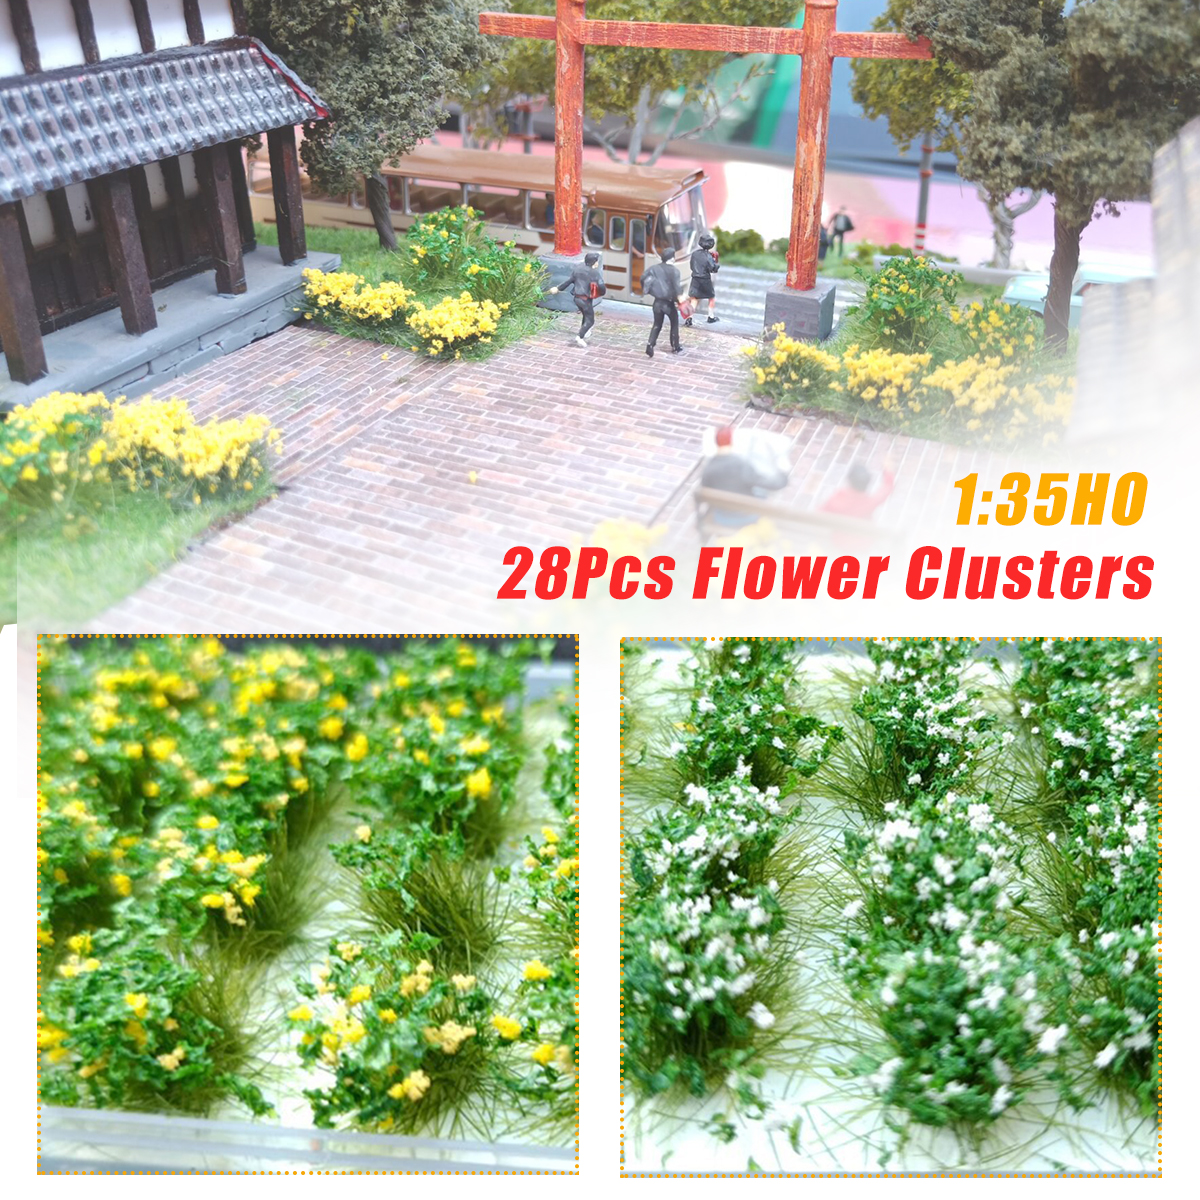 28Pcs-135HO-Flower-Clusters-Miniature-Model-DIY-Building-Landscape-Modelling-Material-1648209-1